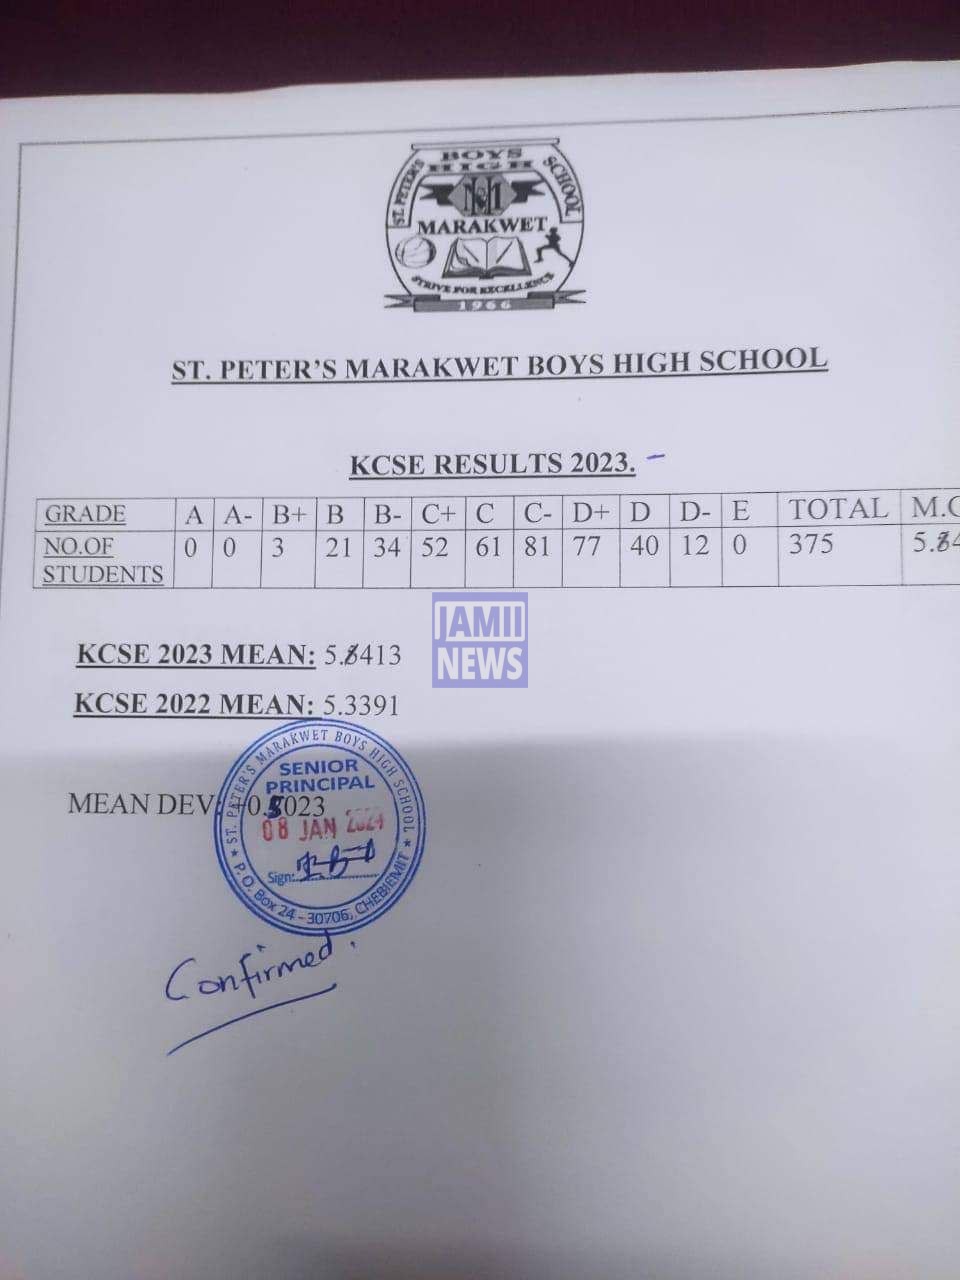 St Peter's Marakwet Boys High School 2023 KCSE Results and Grade Distribution KCSE 2023 Grade Distribution